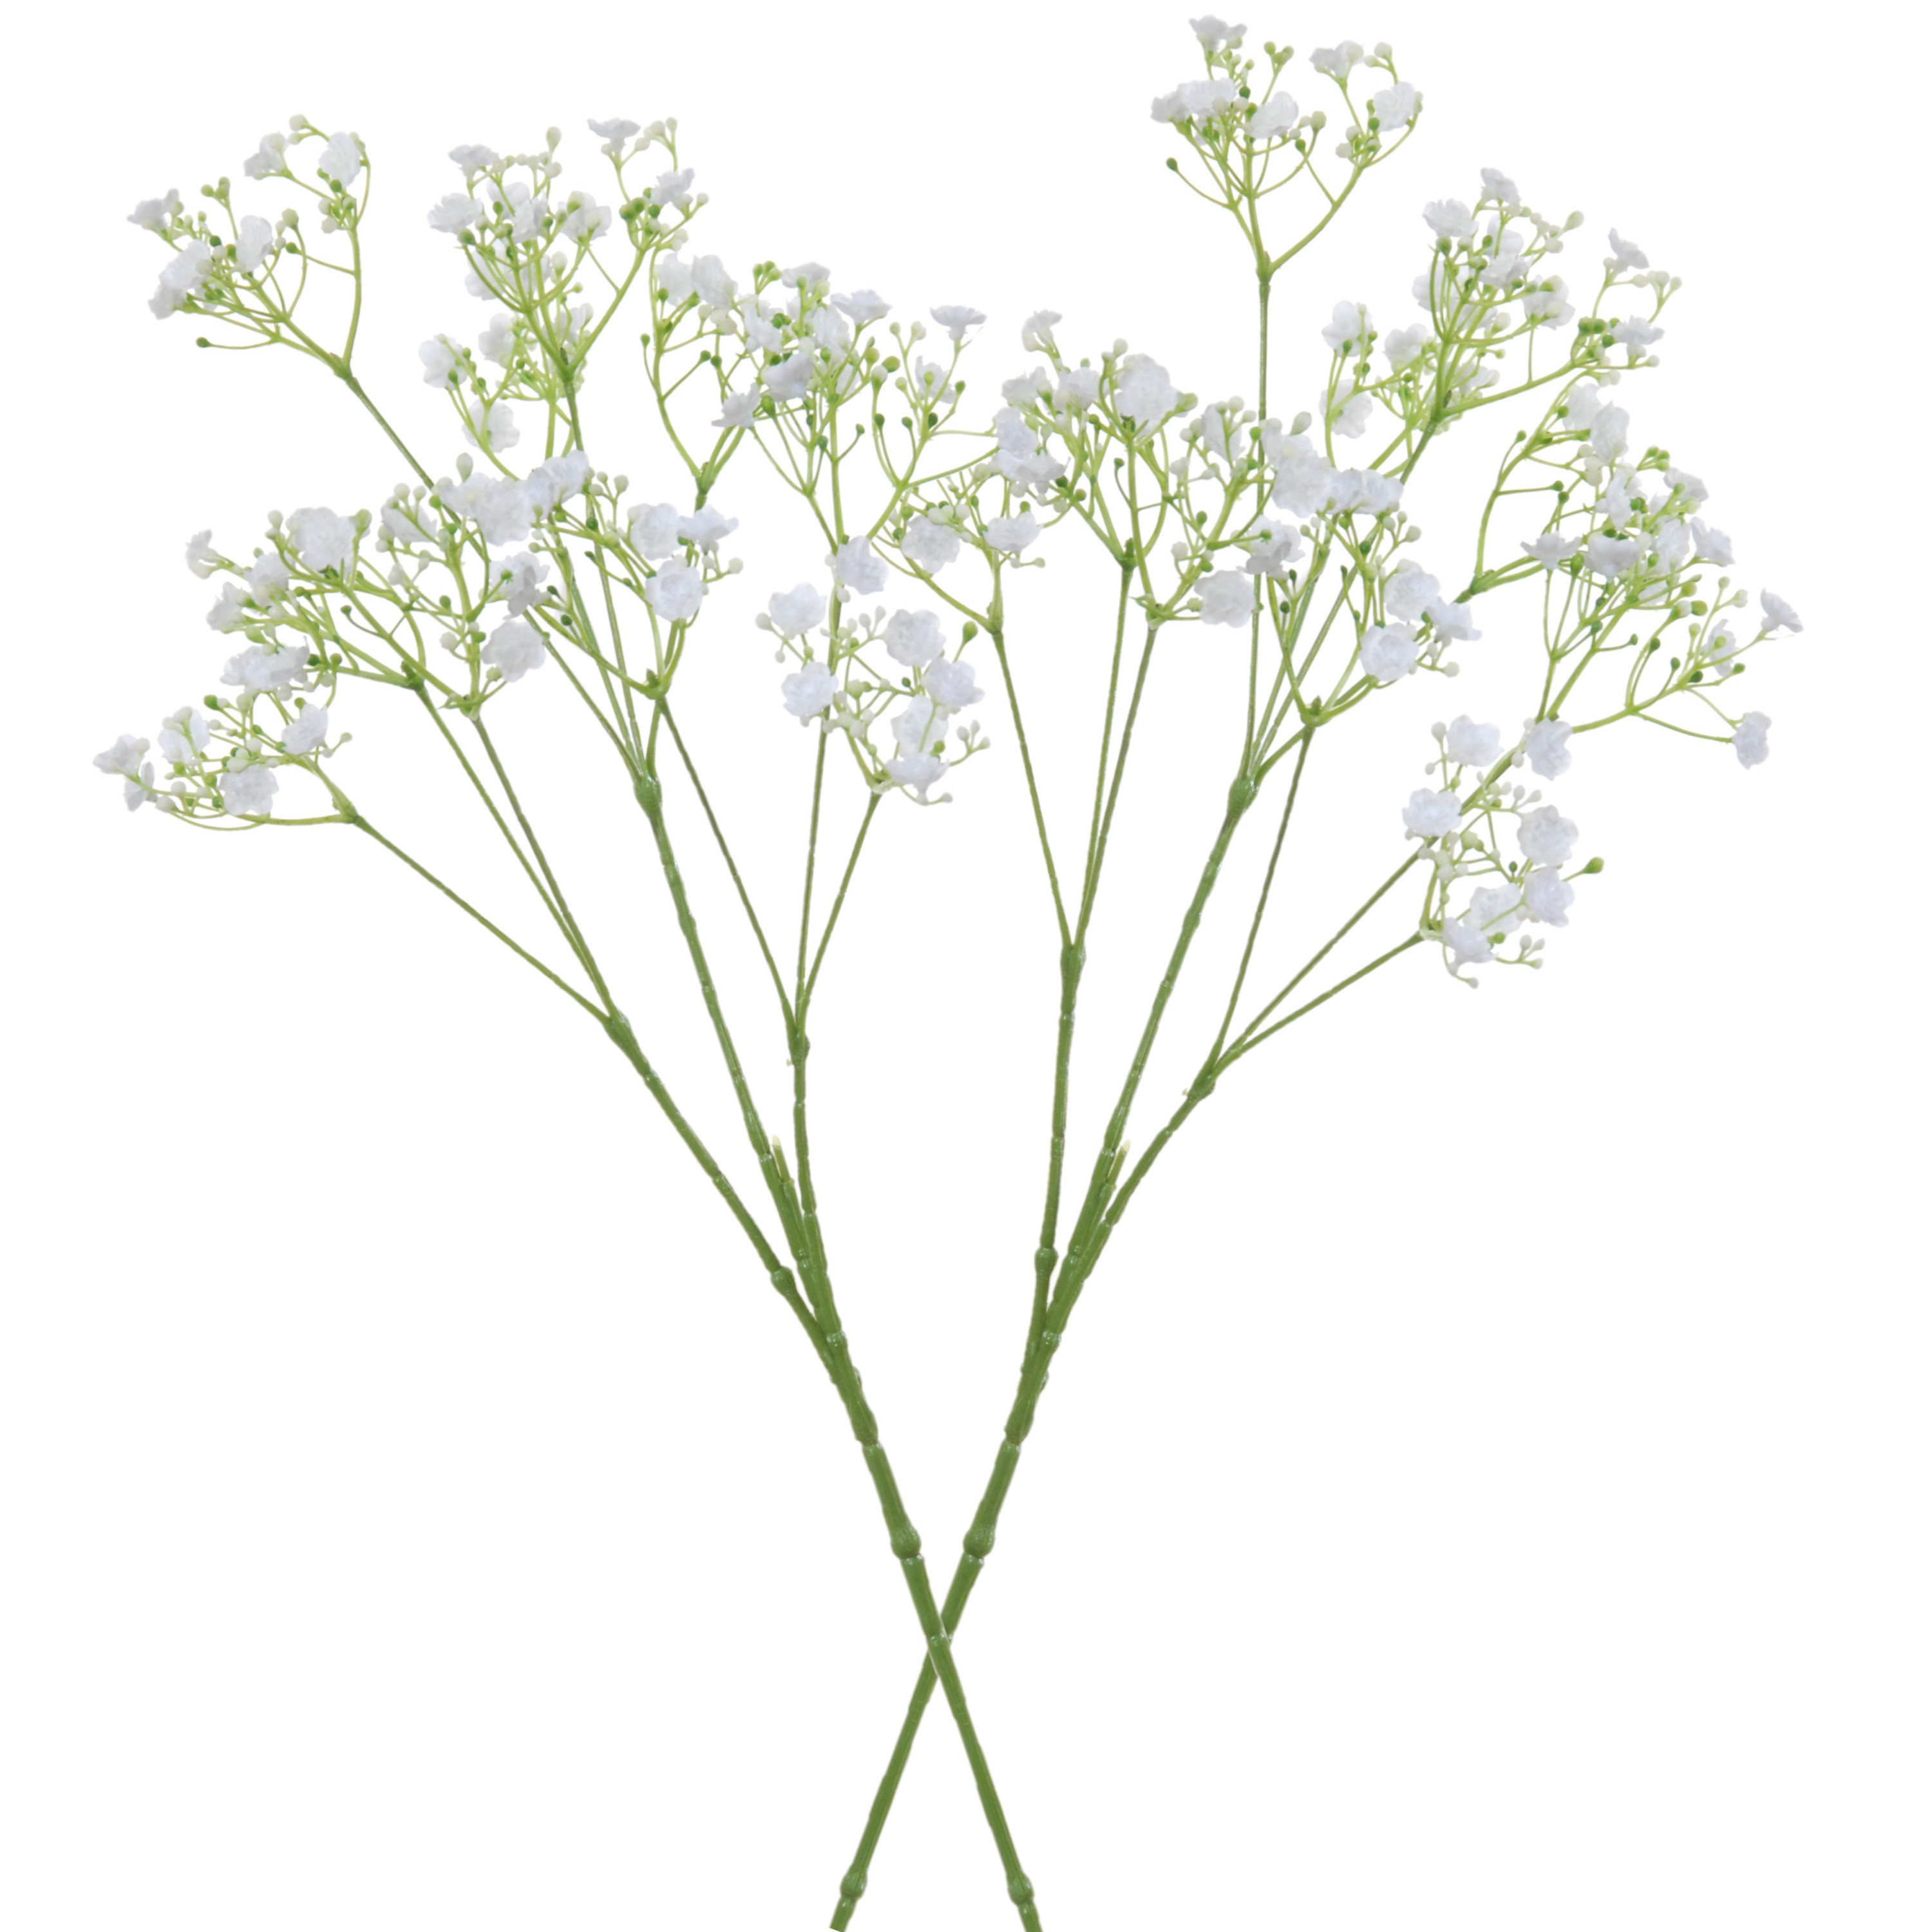 6x stuks kunstbloemen Gipskruid/Gypsophila takken wit 70 cm -